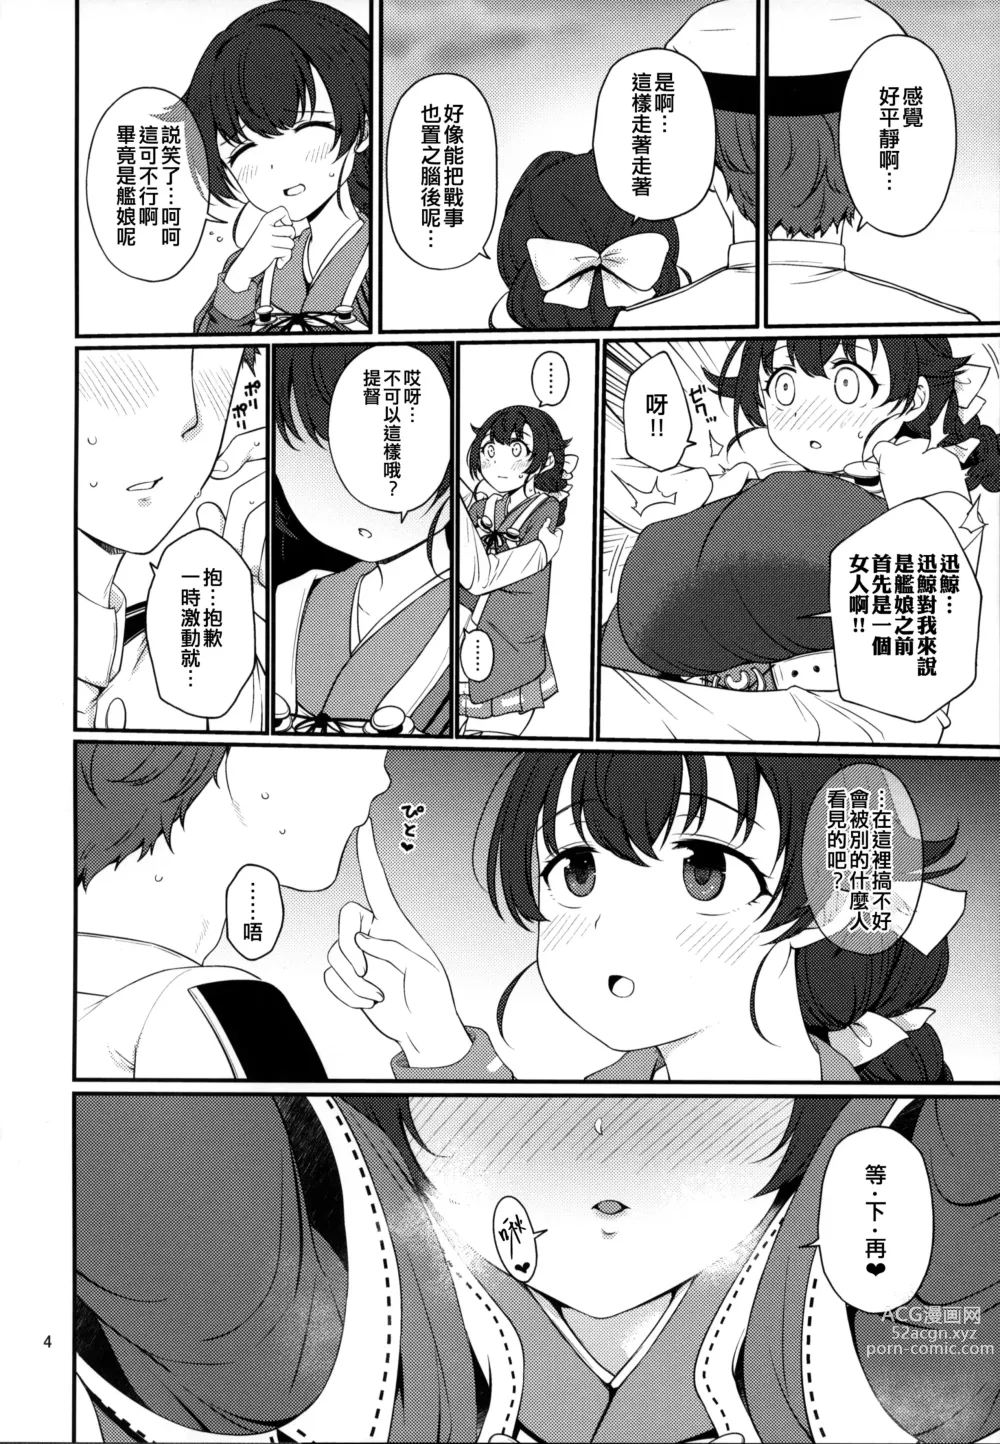 Page 4 of doujinshi Yoru no Jingei